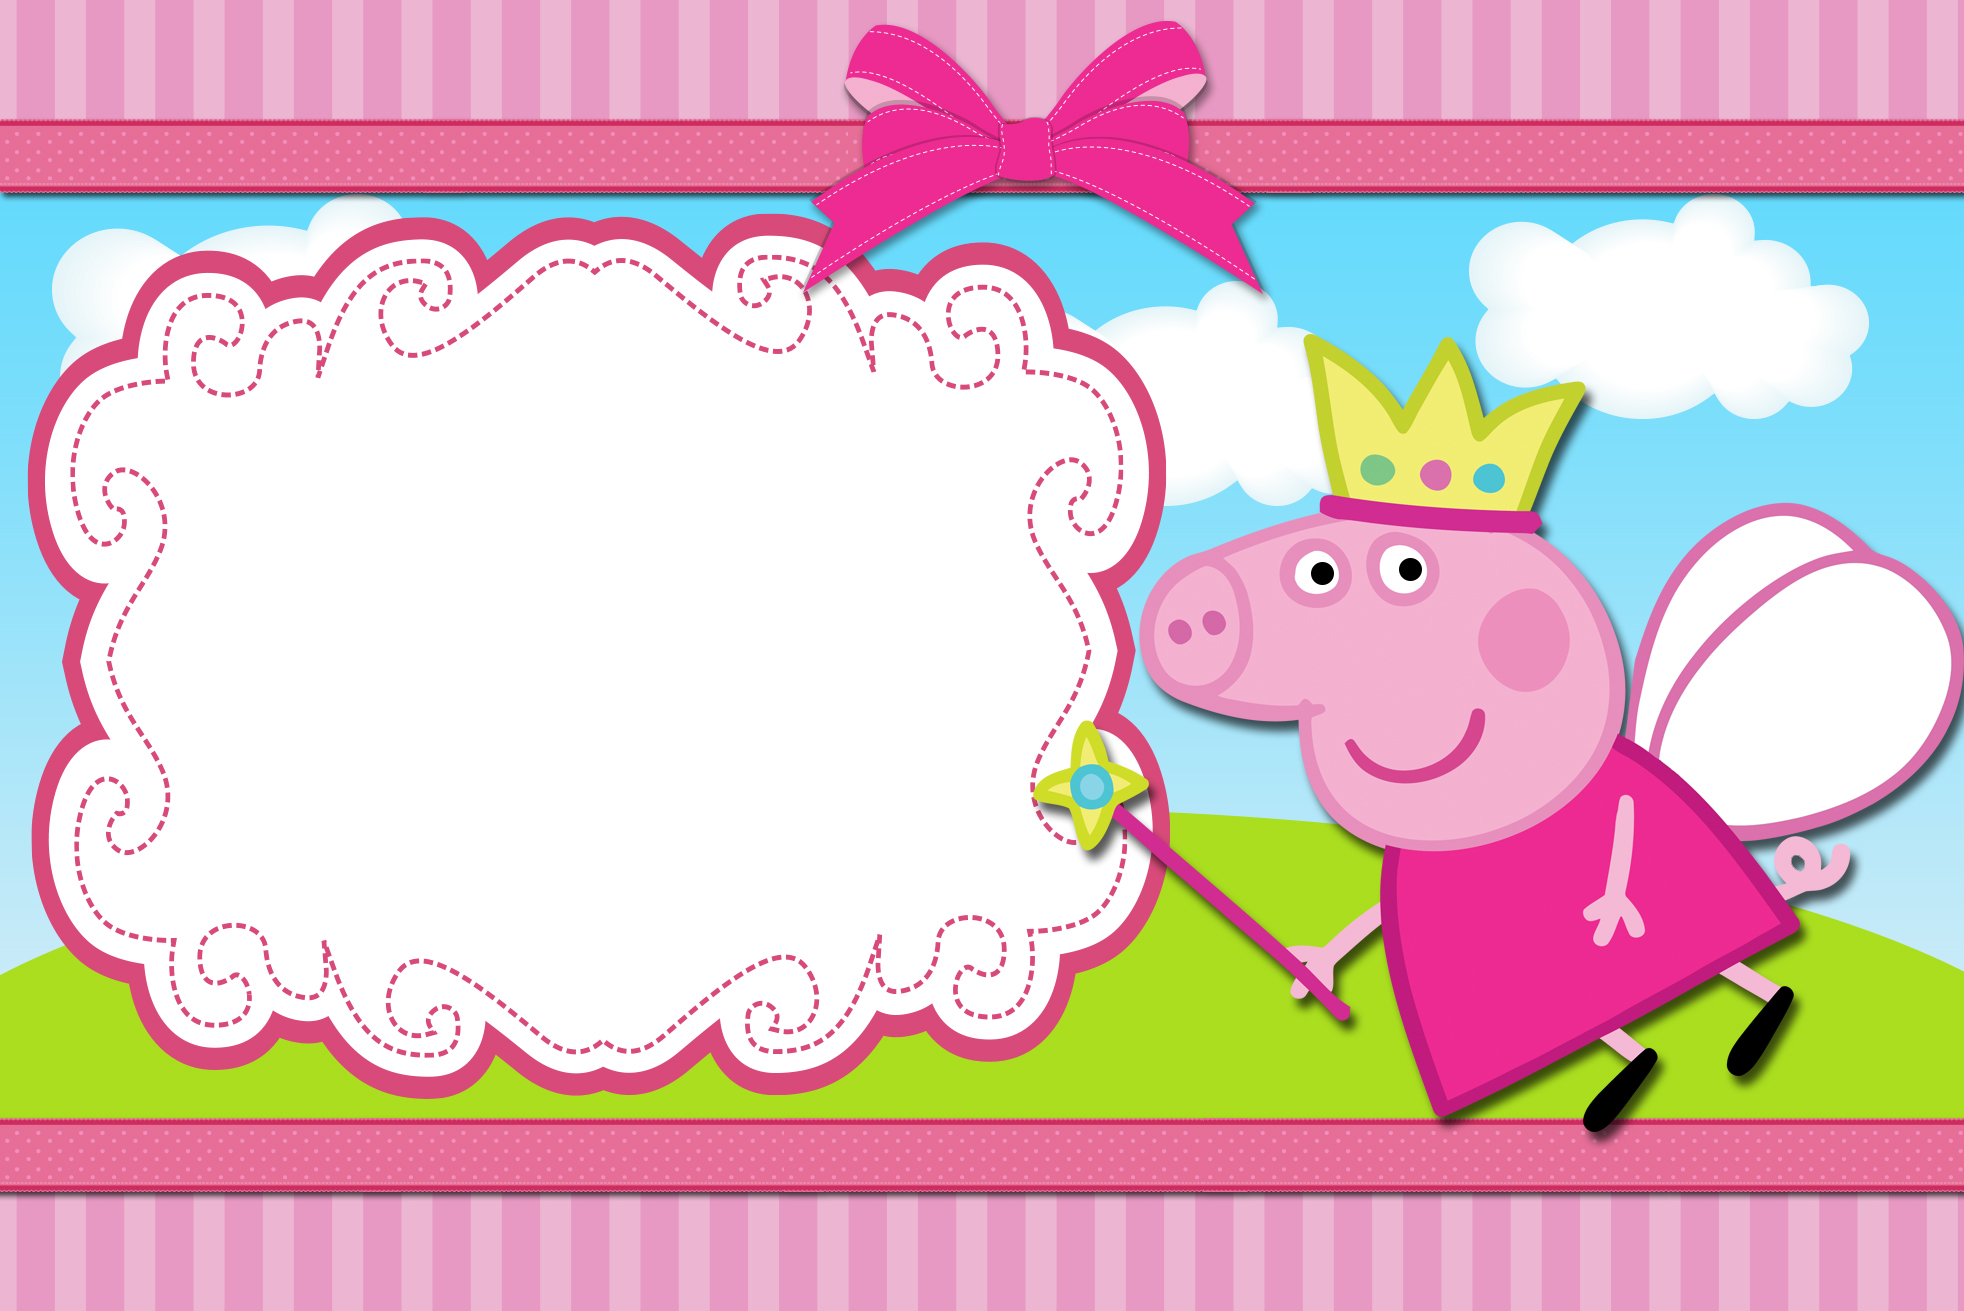 Verter pase a ver valor Fiesta de cumpleaños de Peppa Pig | Tips de Madre